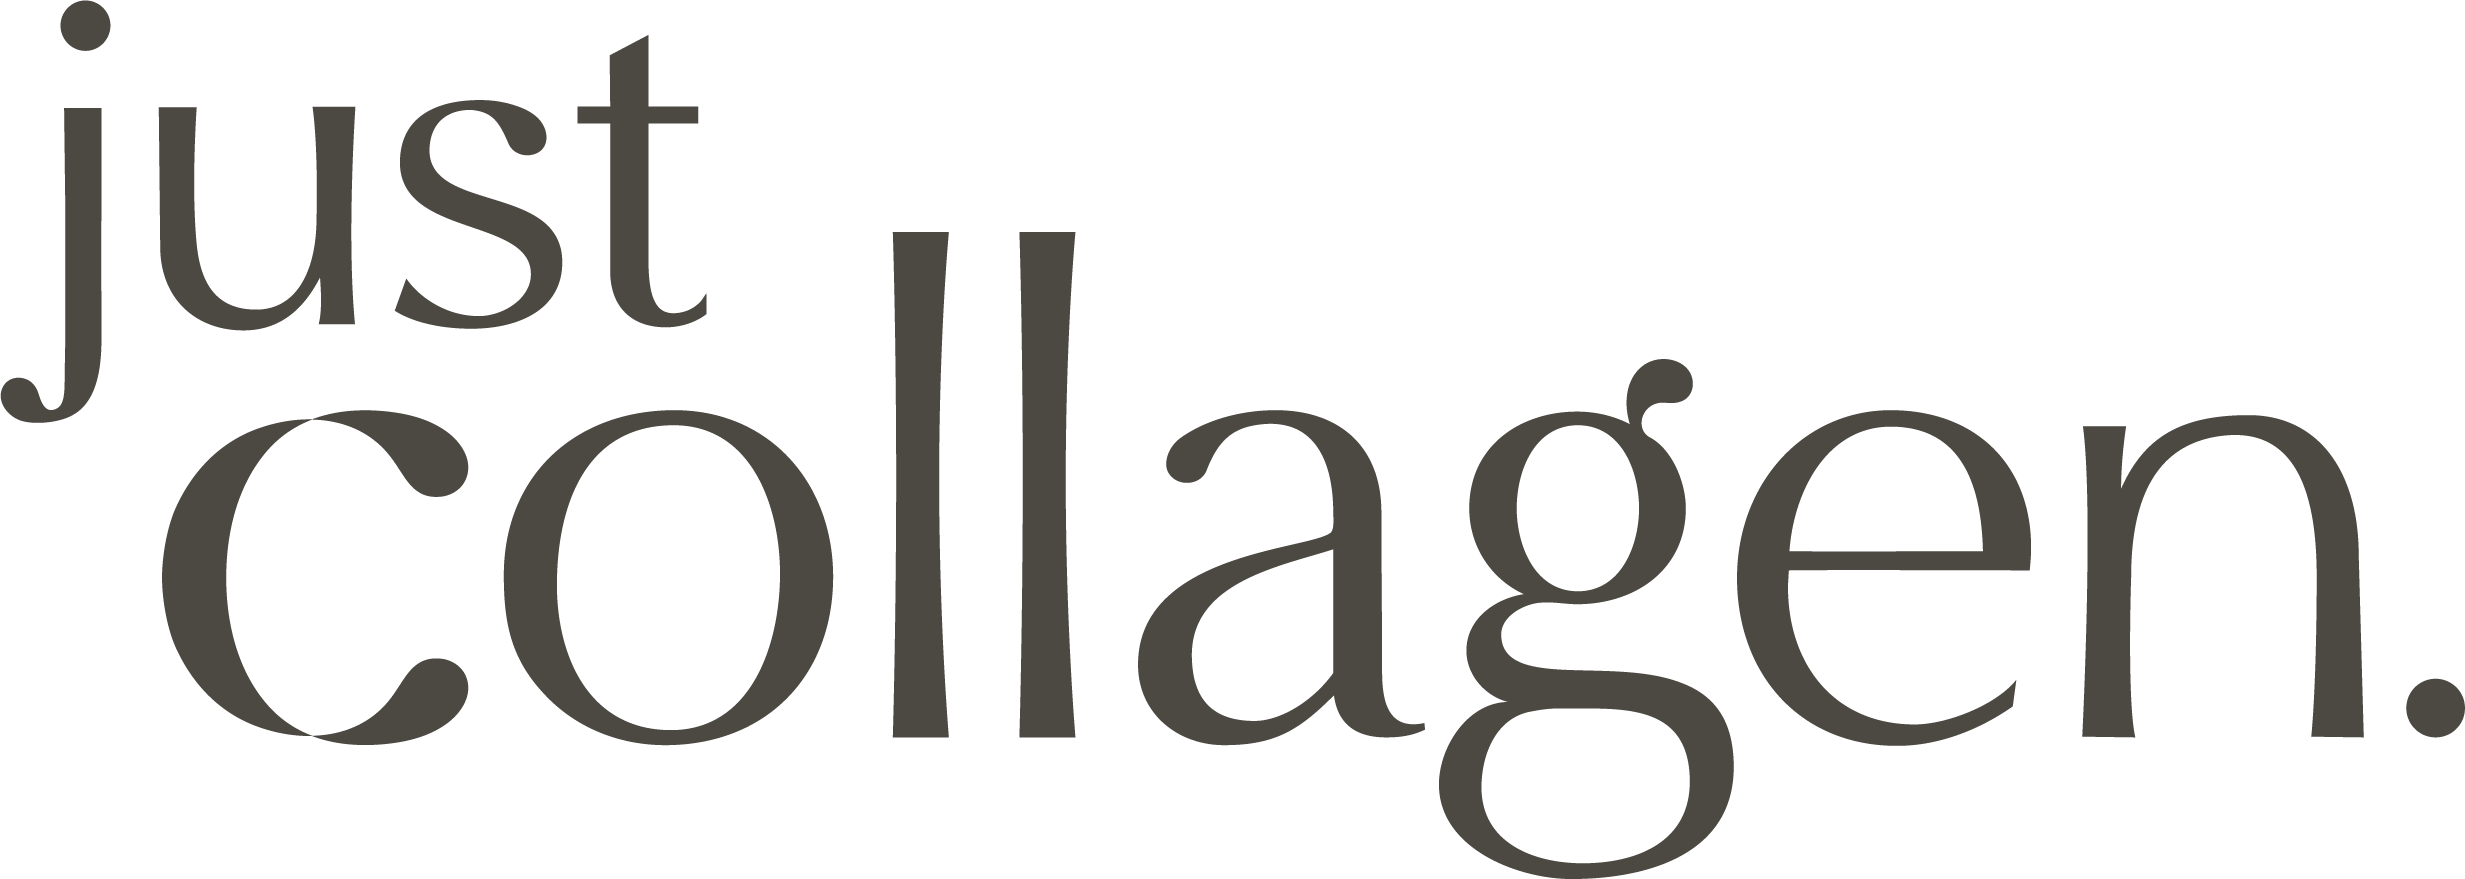 Just Collagen Canada Logo Black